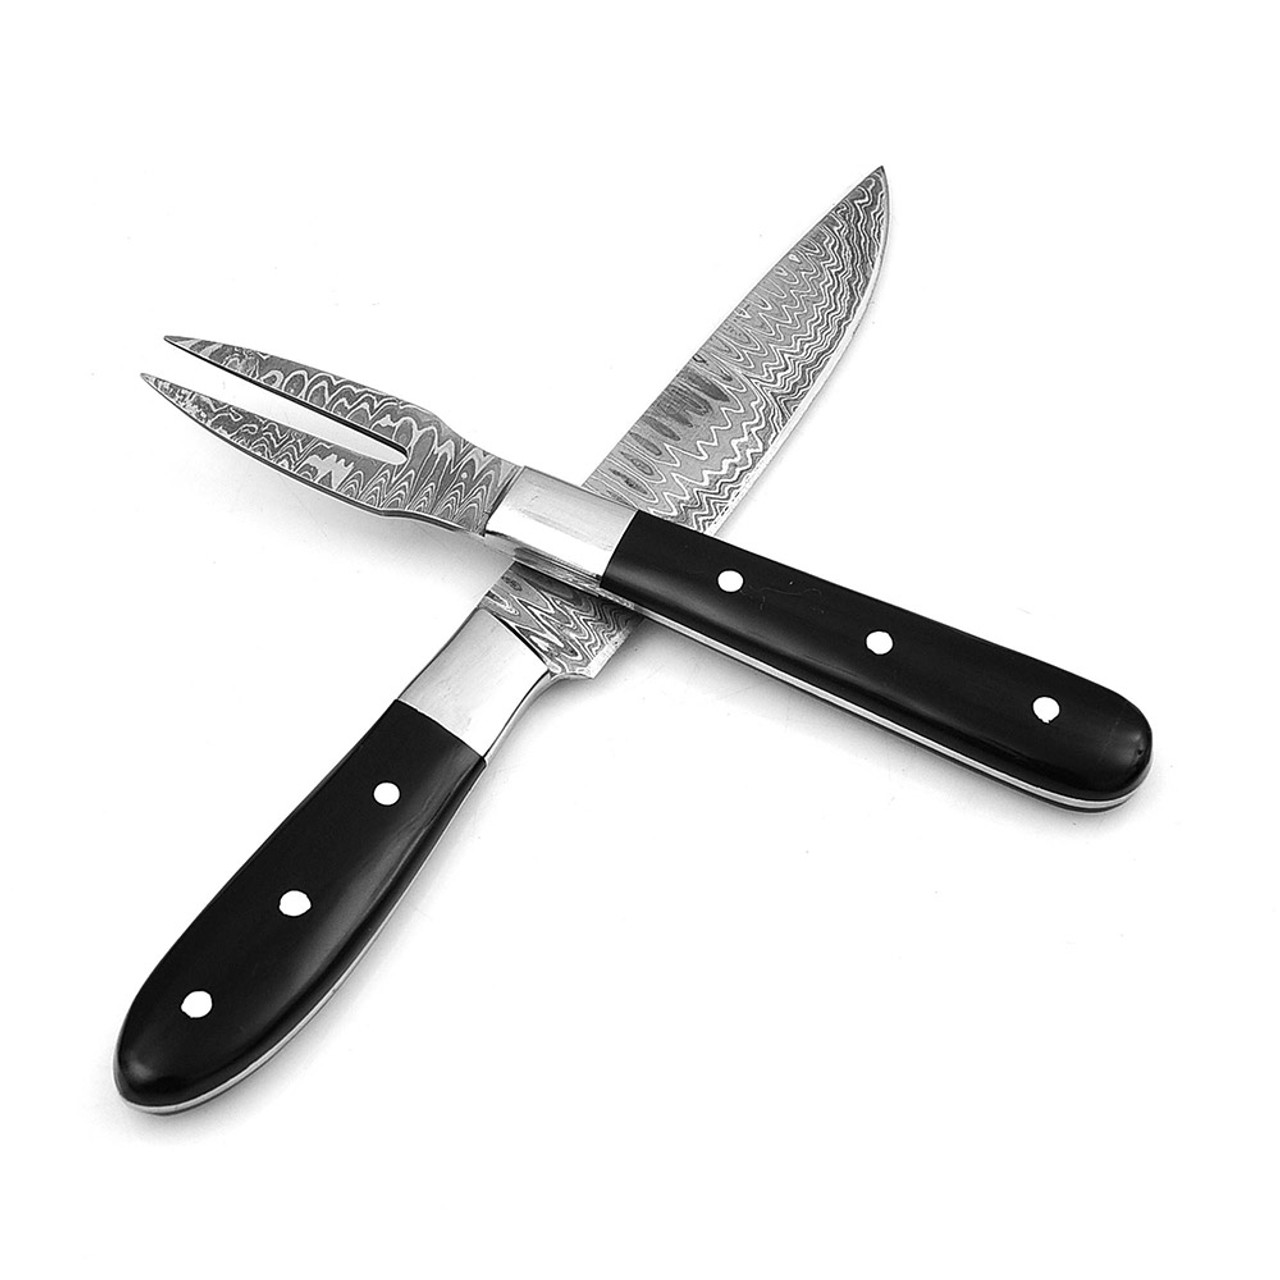 Damascus Cutlery】Damascus Steel 8pcs 5 Steak Knife and Fork Set Serr –